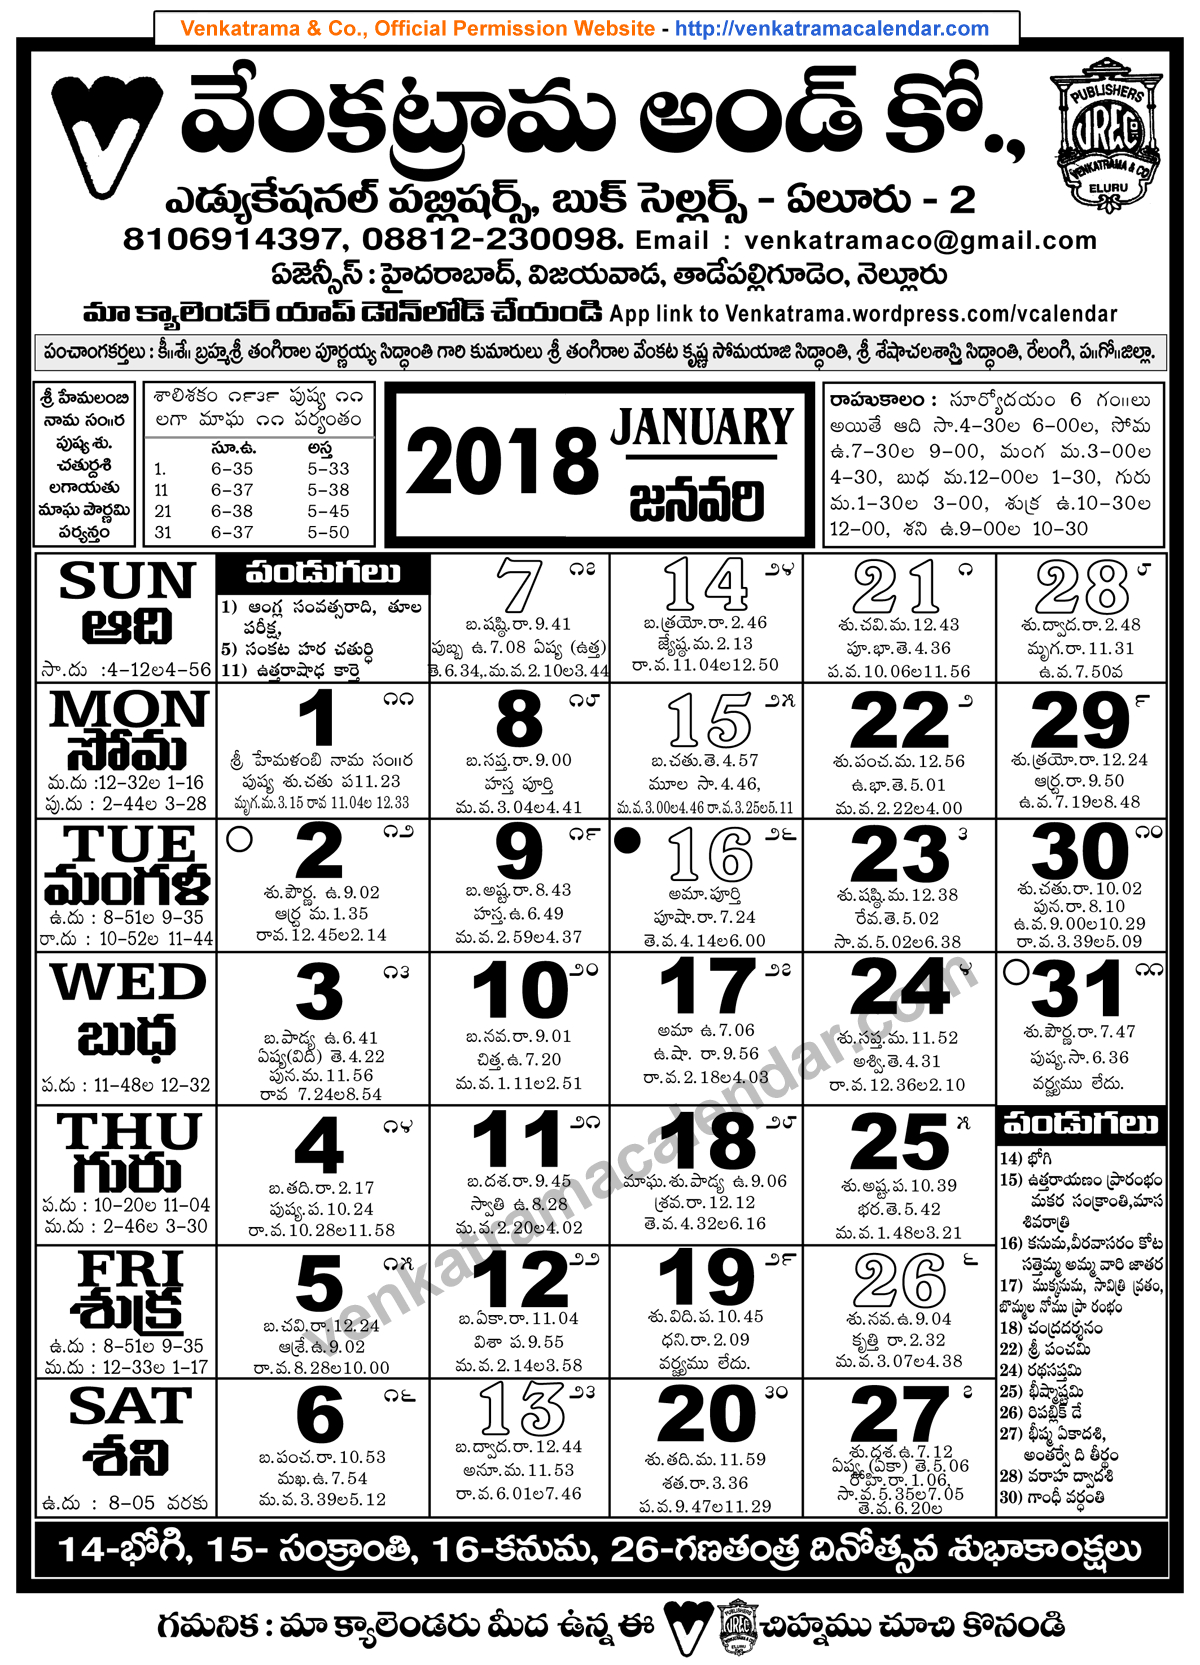 Venkatrama Co 2018 January Telugu Calendar Festivals